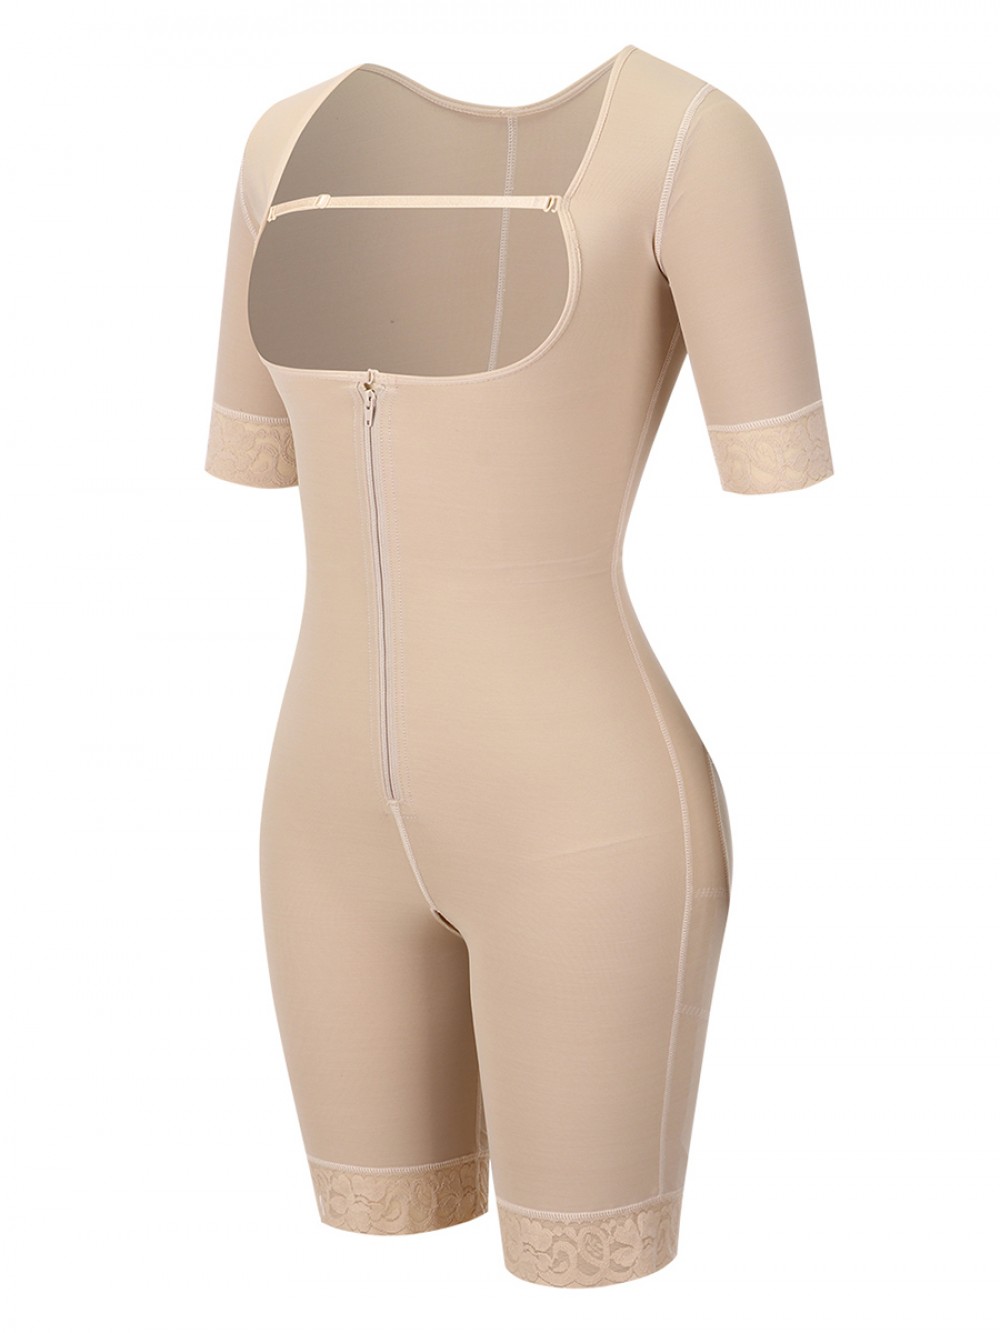 Elasticated Skin Color Lace Full Body Shaper Zipper Open Crotch High Quality